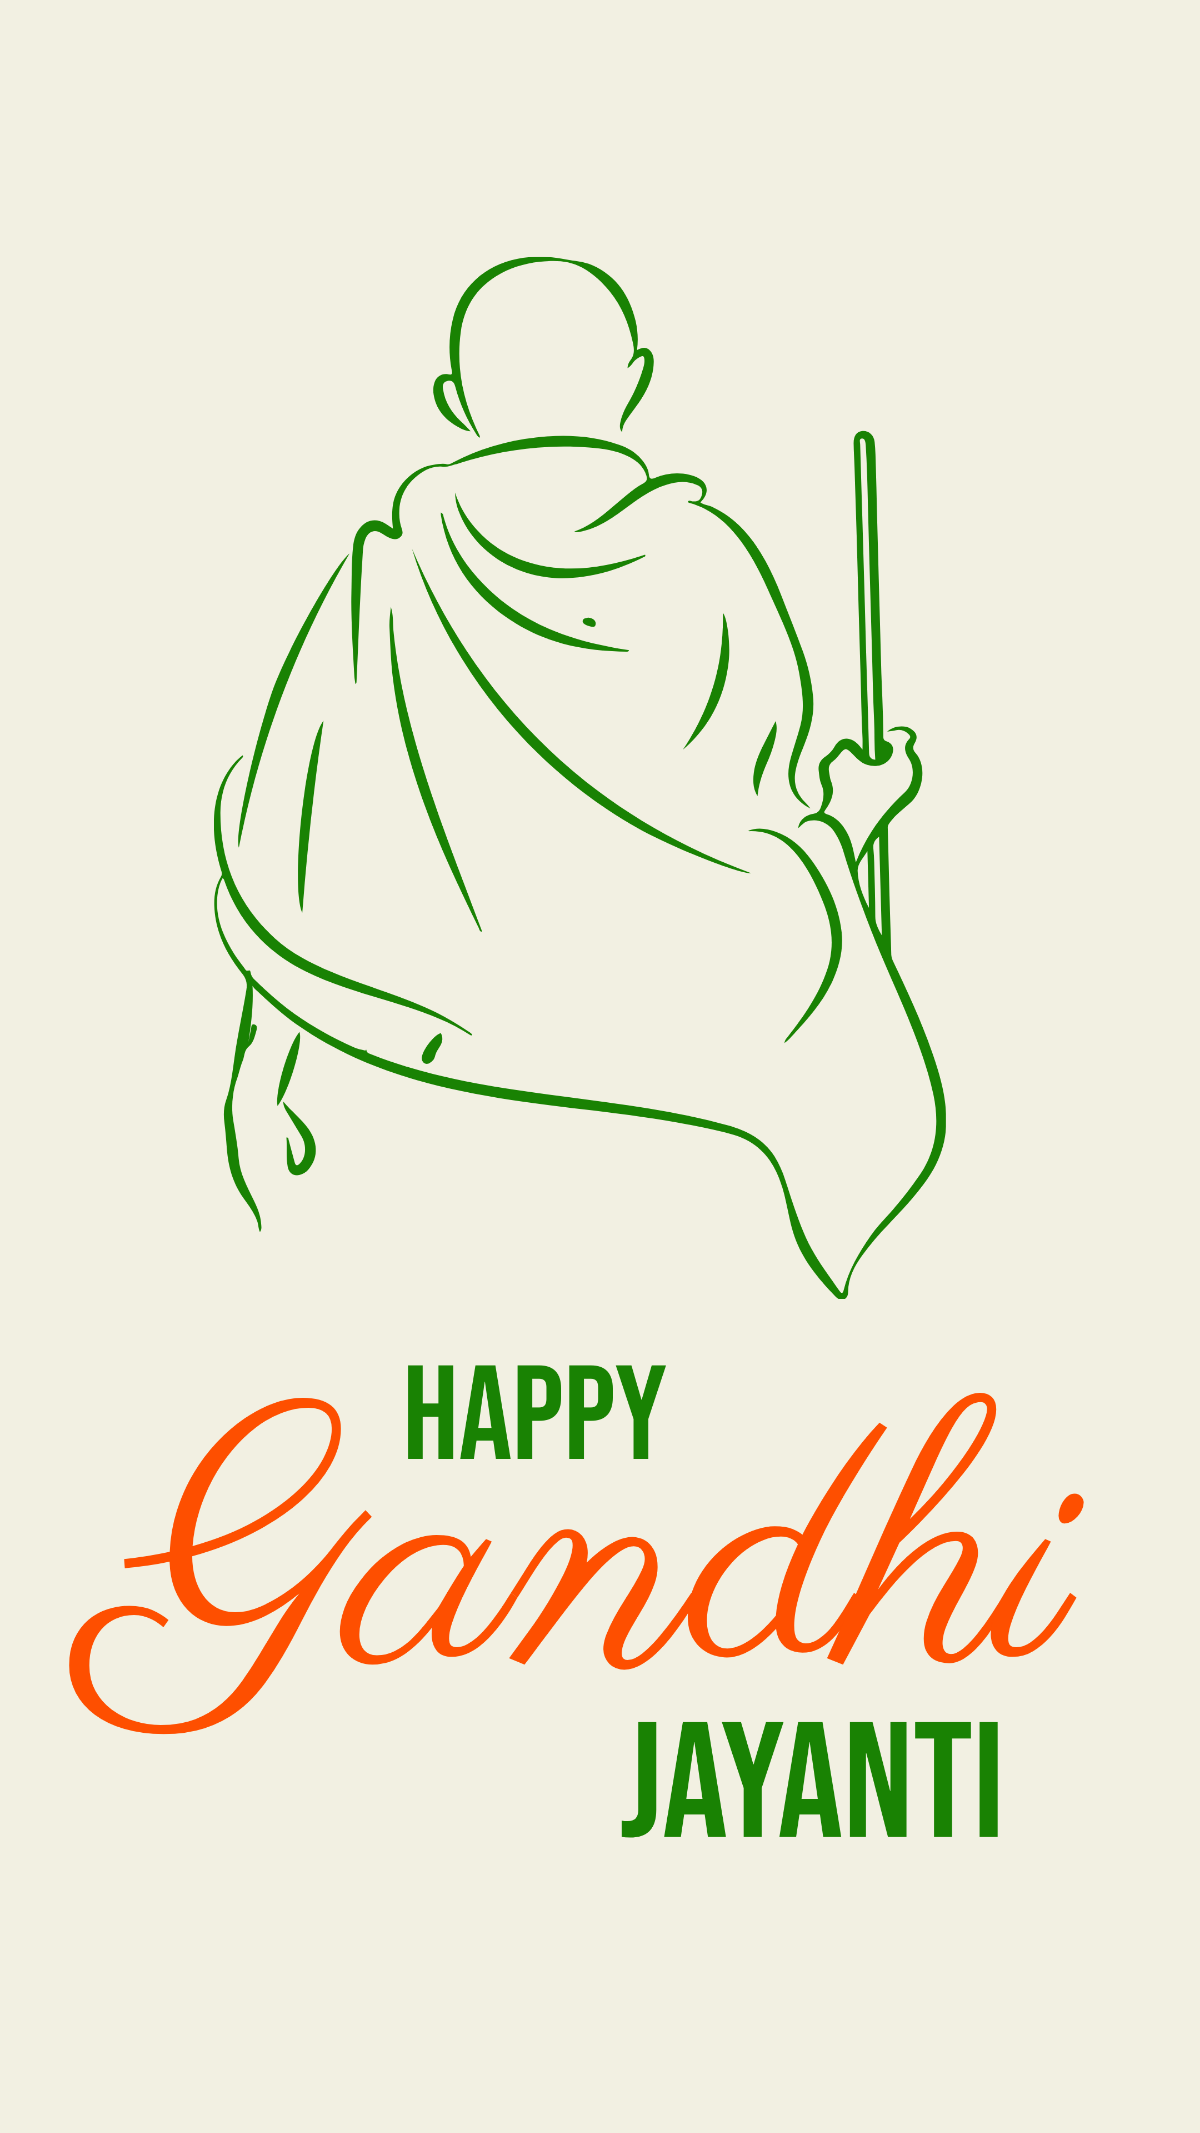 Free Gandhi Jayanti iPhone Background Template